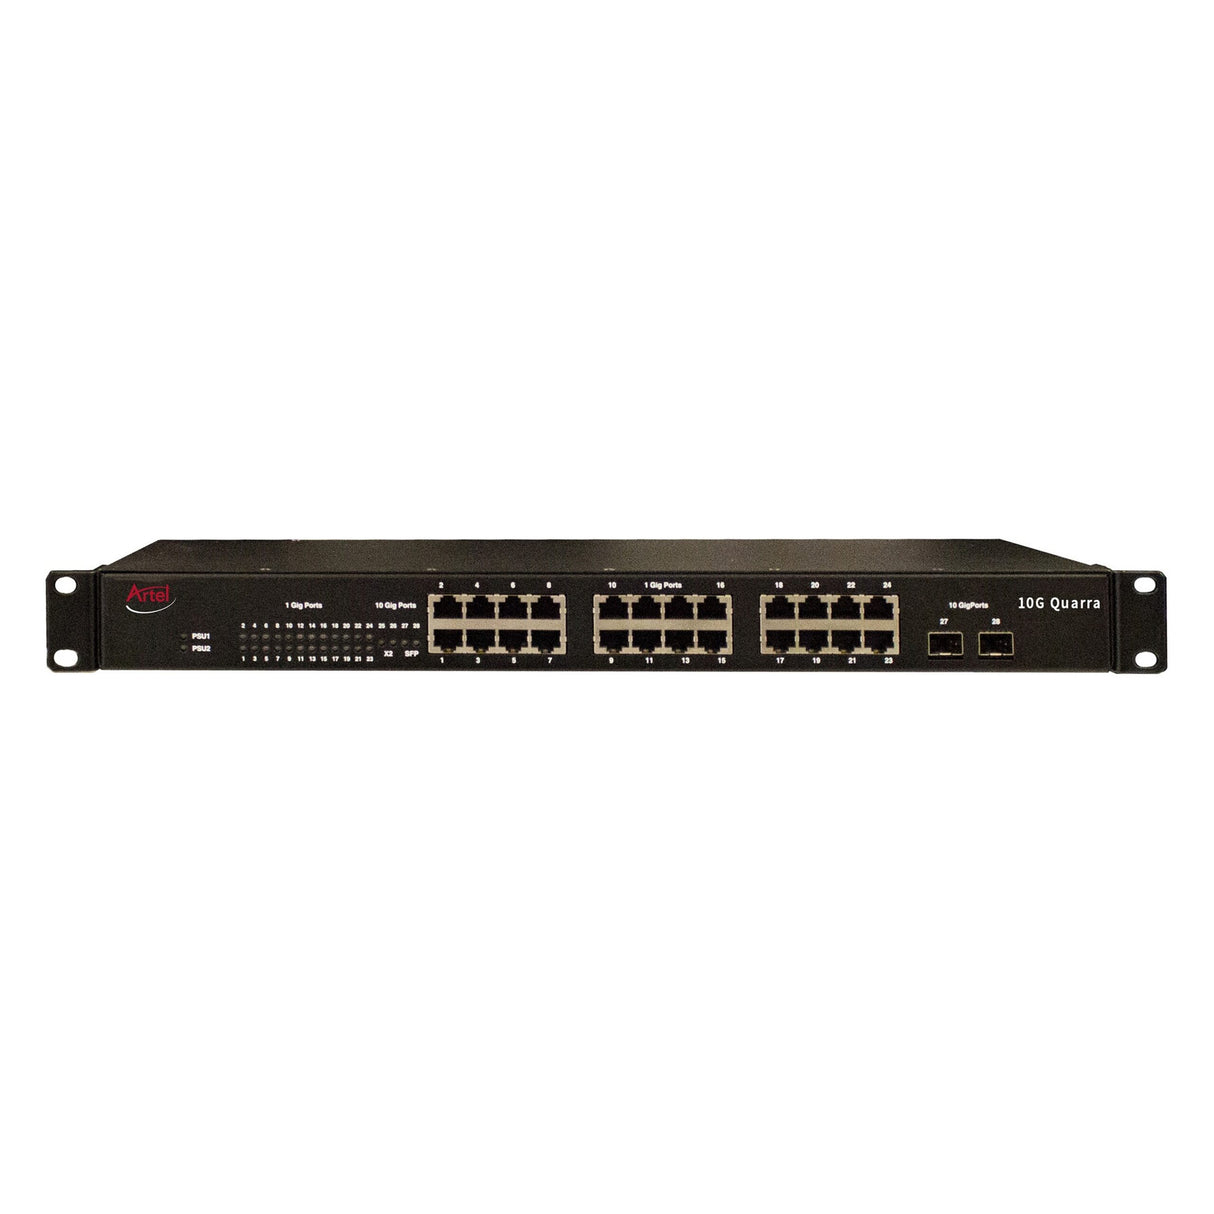 Artel 10000-EQ001-BOM 10G Ethernet Switch, QUARRA PTP Switch, Desktop